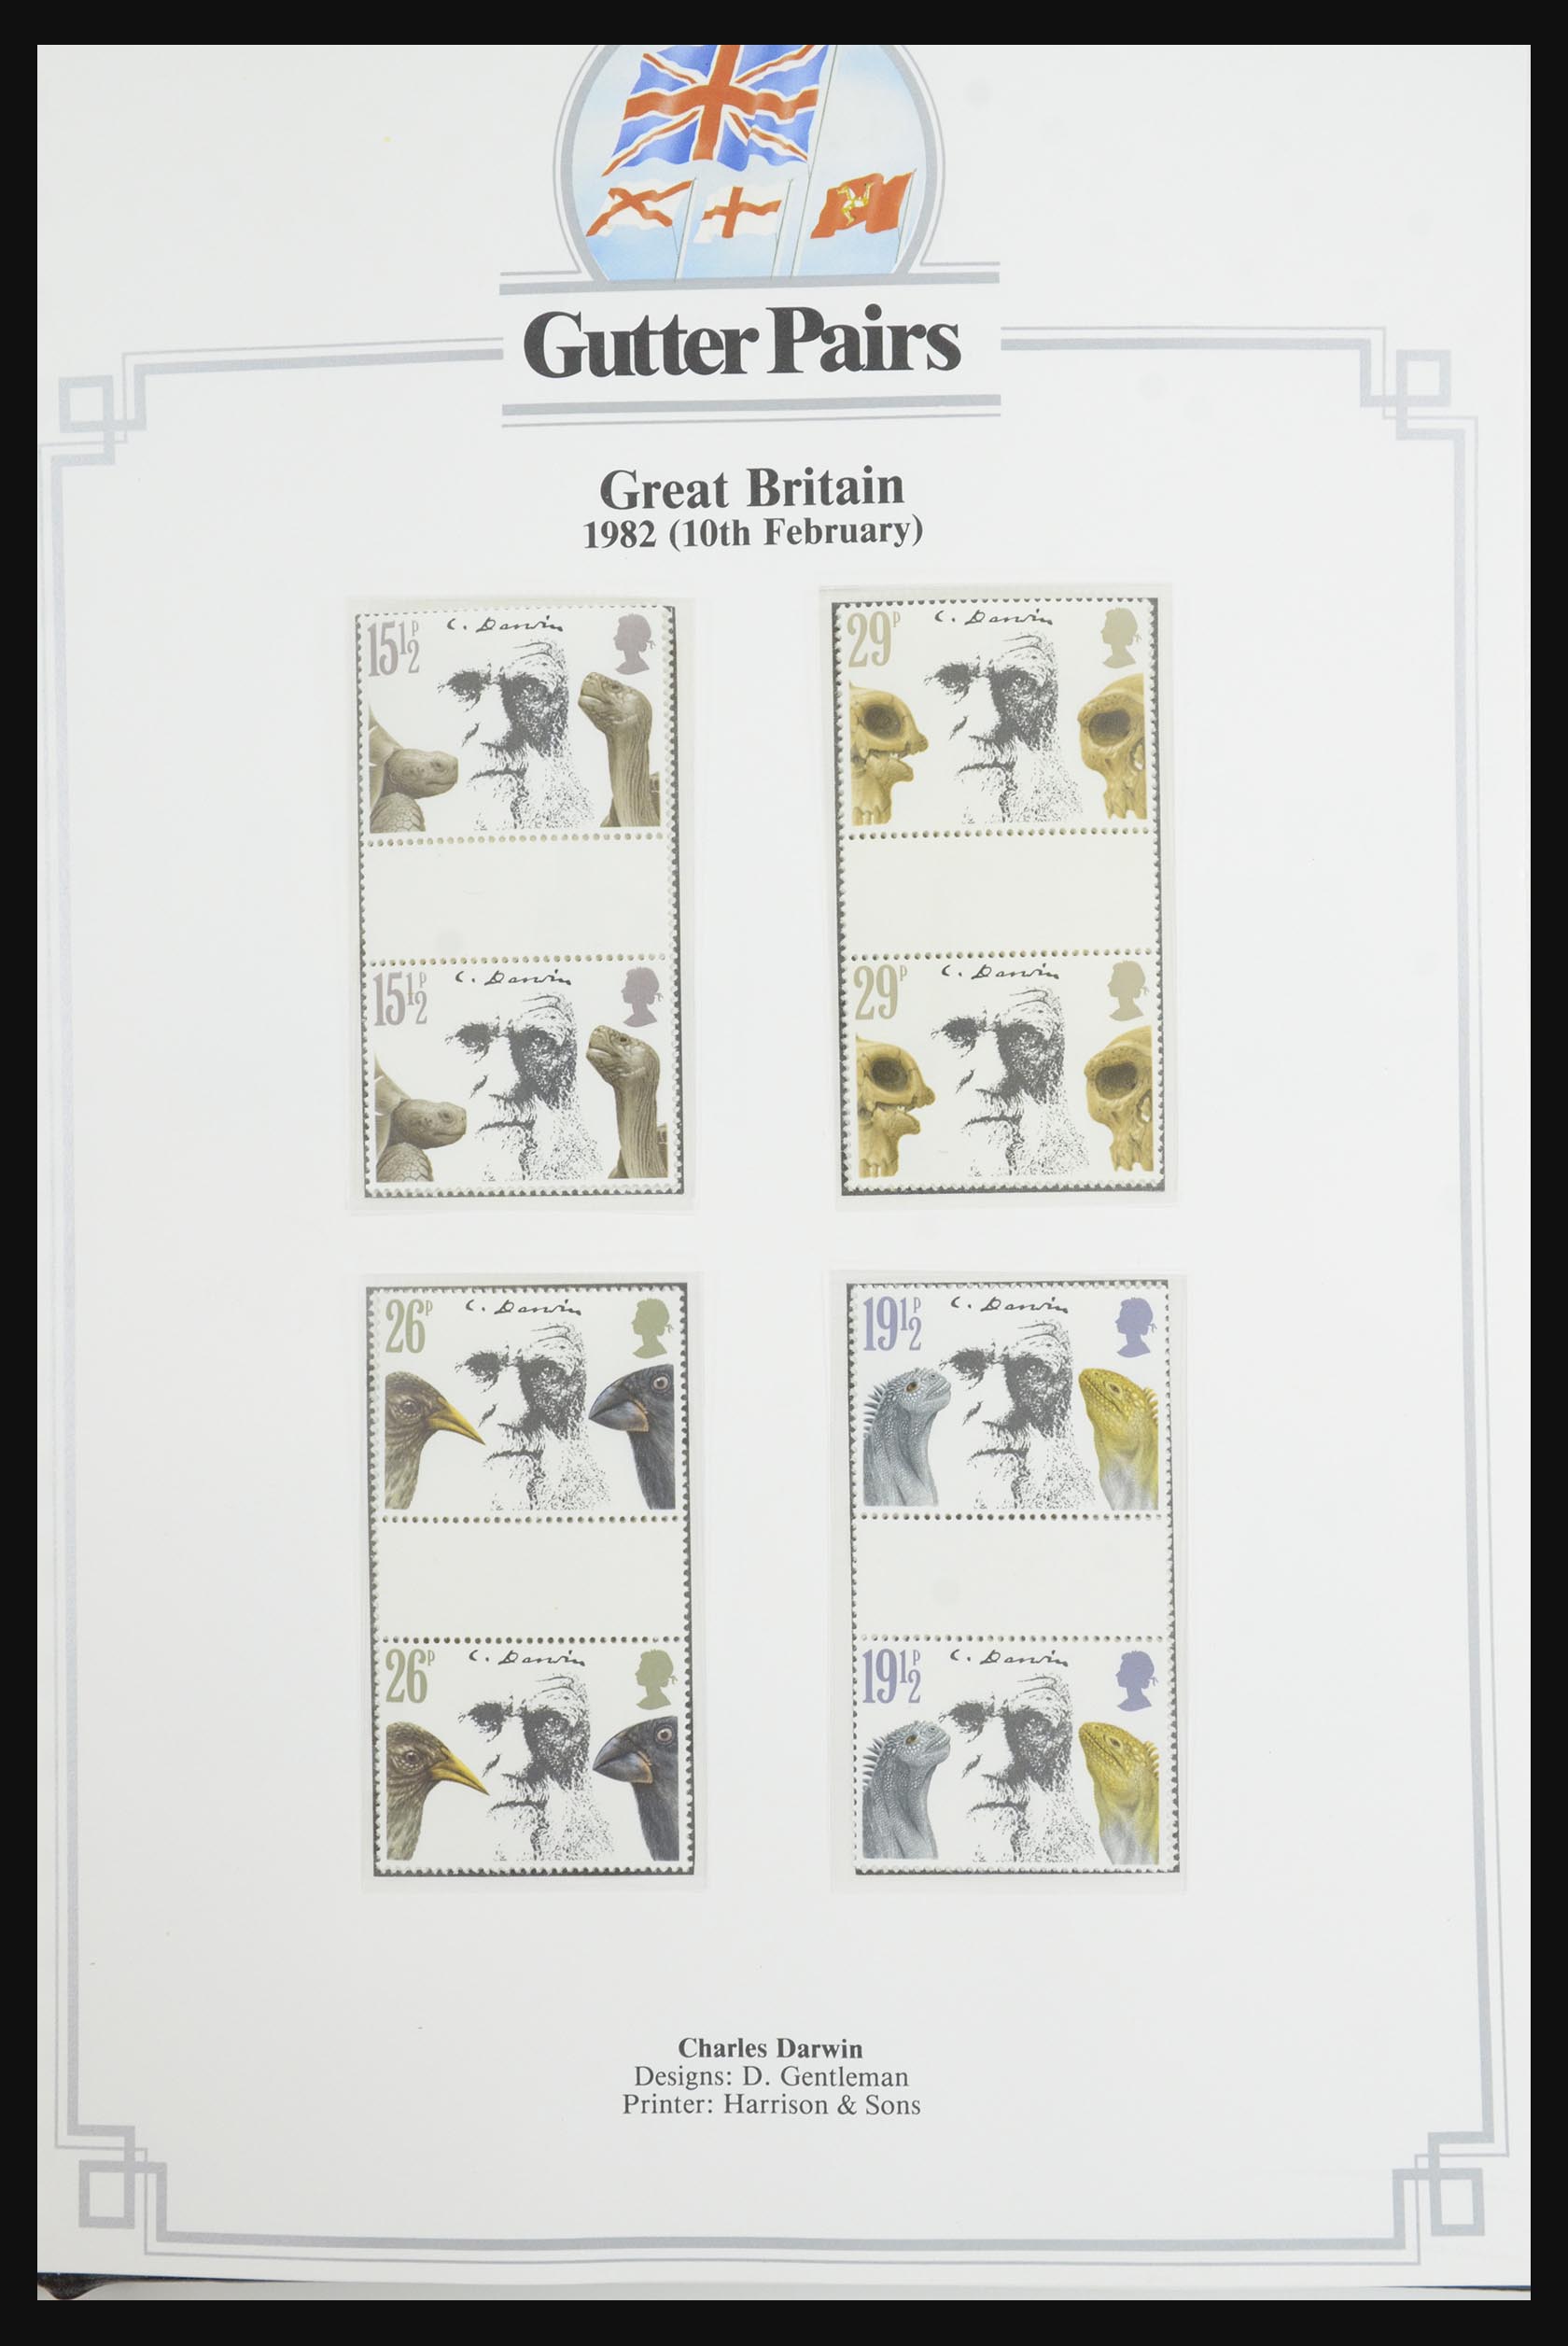 31717 027 - 31717 Great Britain gutterpairs 1976-1991.